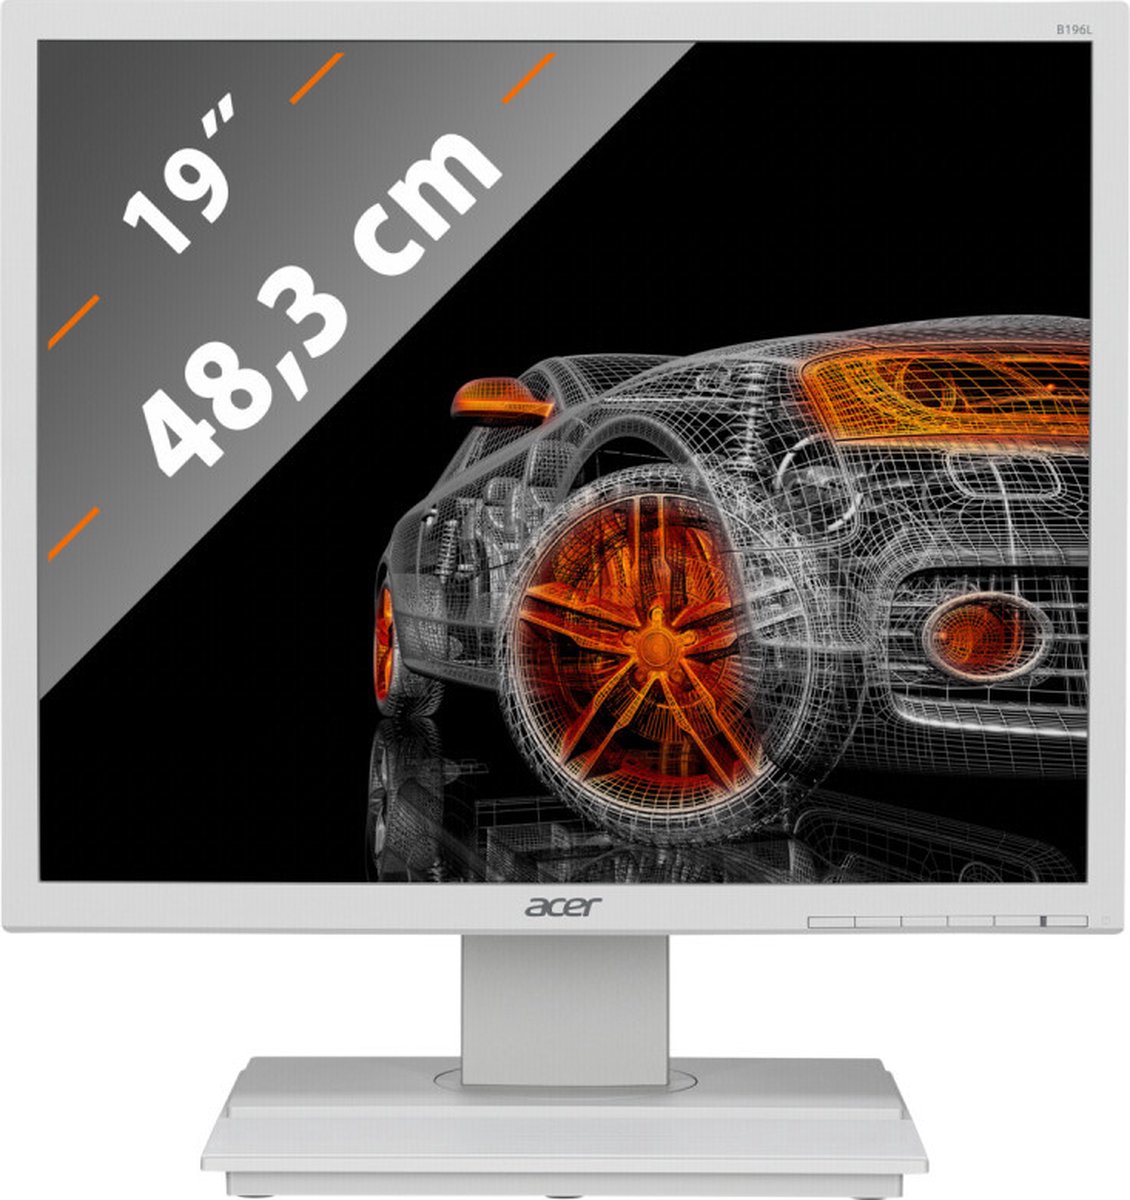 Acer B6 B196LA - 19 inch - 1280 x 1024